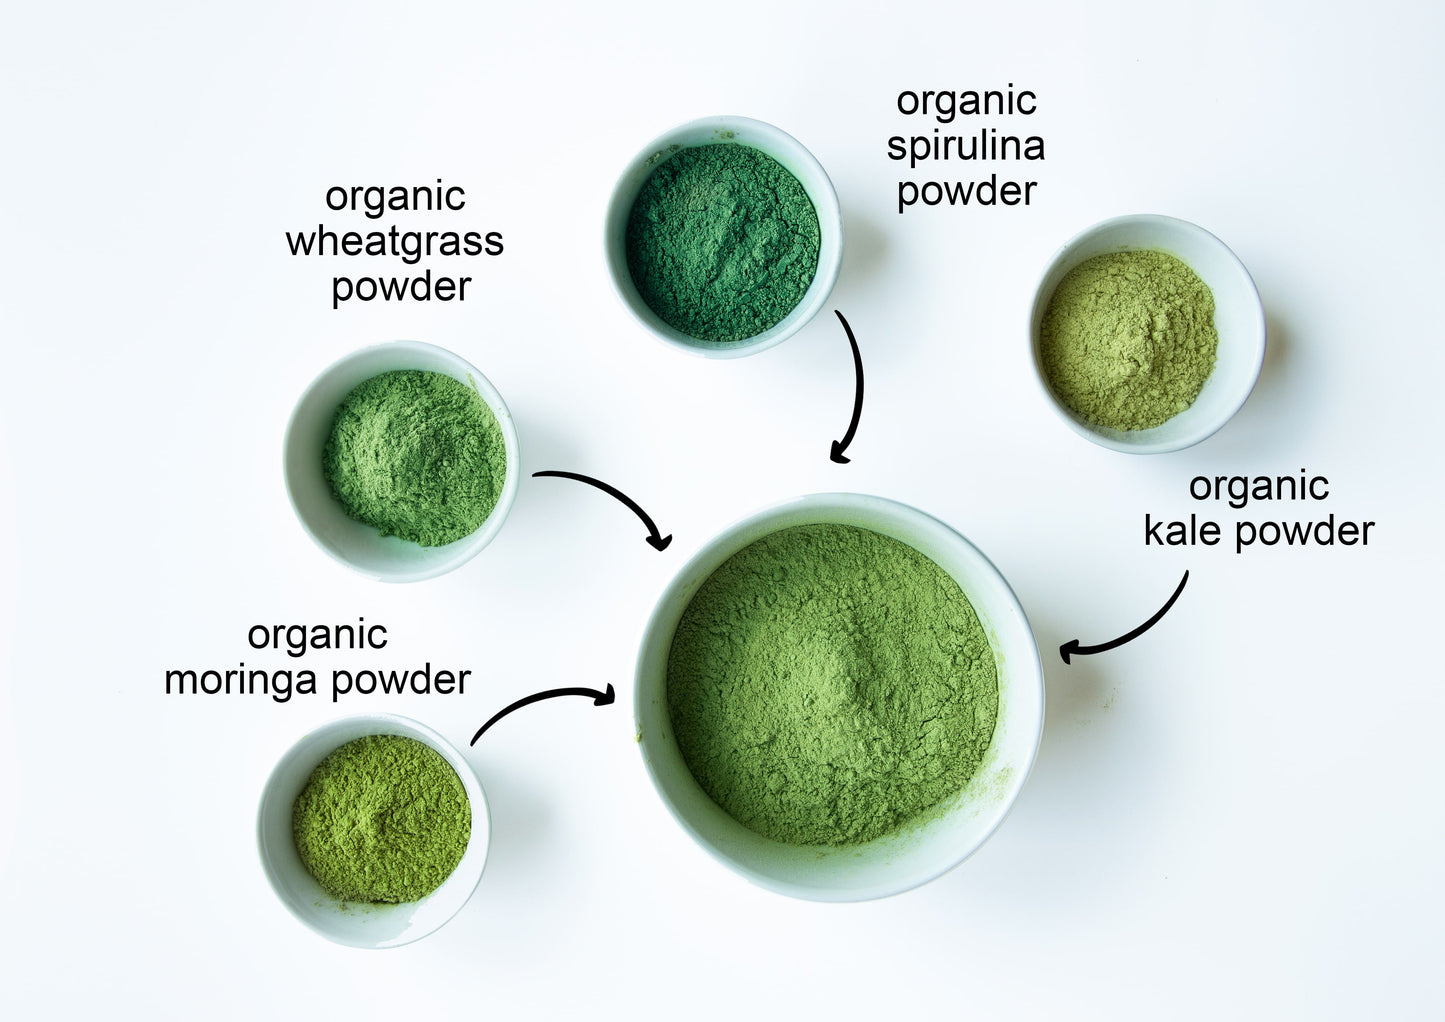 Organic SuperGreens Powder Blend – Mixed Kale, Moringa, Spirulina, Wheatgrass Powders. Non-GMO, Pure, Vegan, Bulk. Rich in Antioxidants, Chlorophyll. Great for Juices, Smoothies, Baking